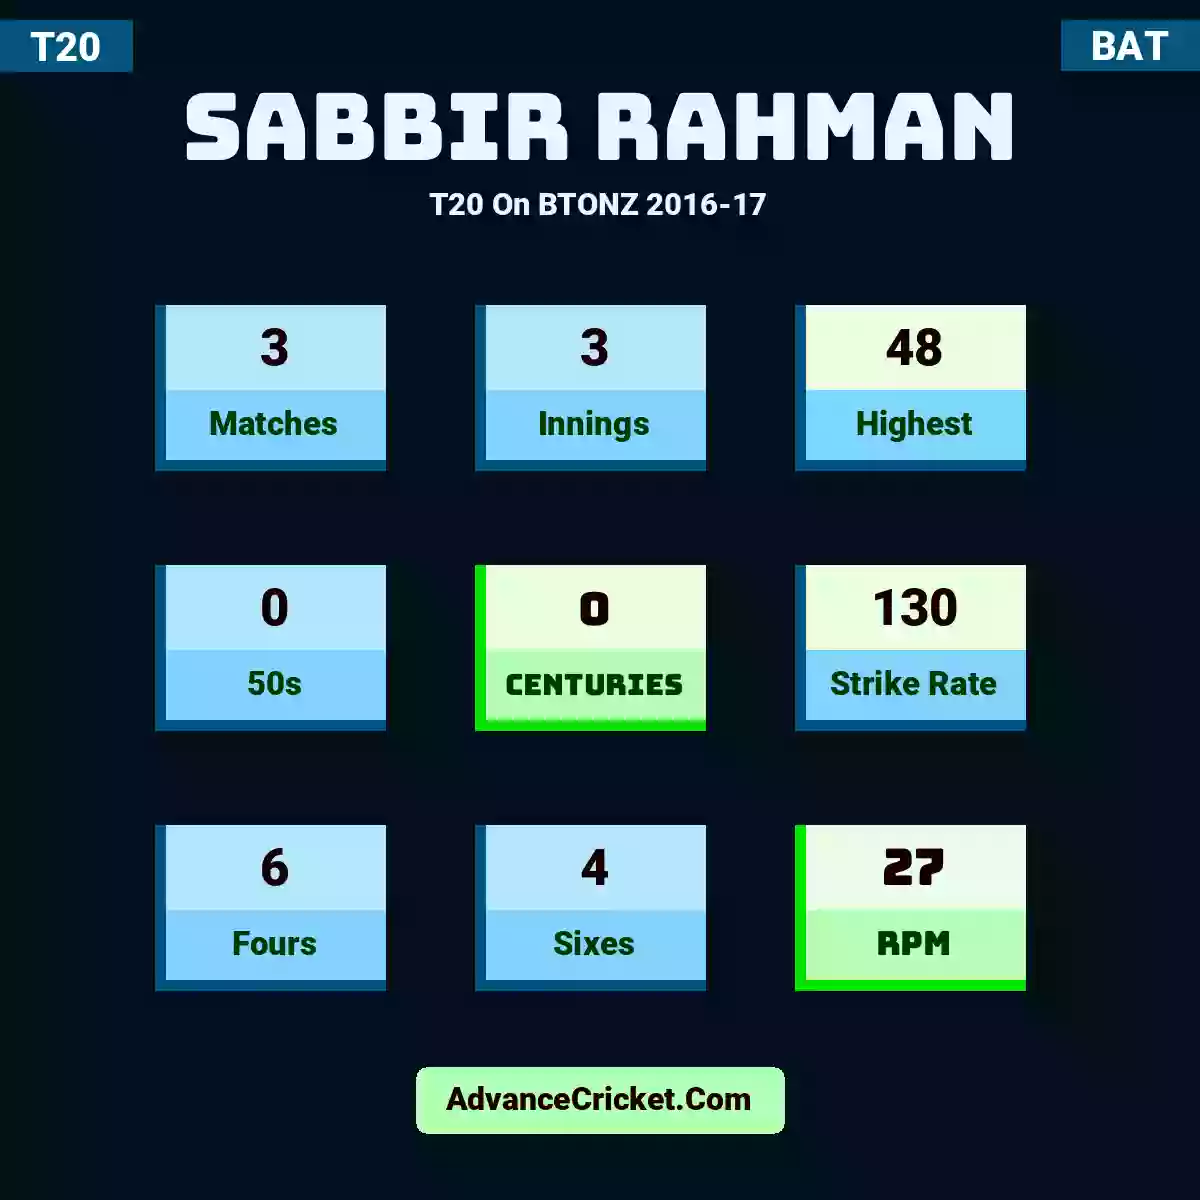 Sabbir Rahman T20  On BTONZ 2016-17, Sabbir Rahman played 3 matches, scored 48 runs as highest, 0 half-centuries, and 0 centuries, with a strike rate of 130. S.Rahman hit 6 fours and 4 sixes, with an RPM of 27.